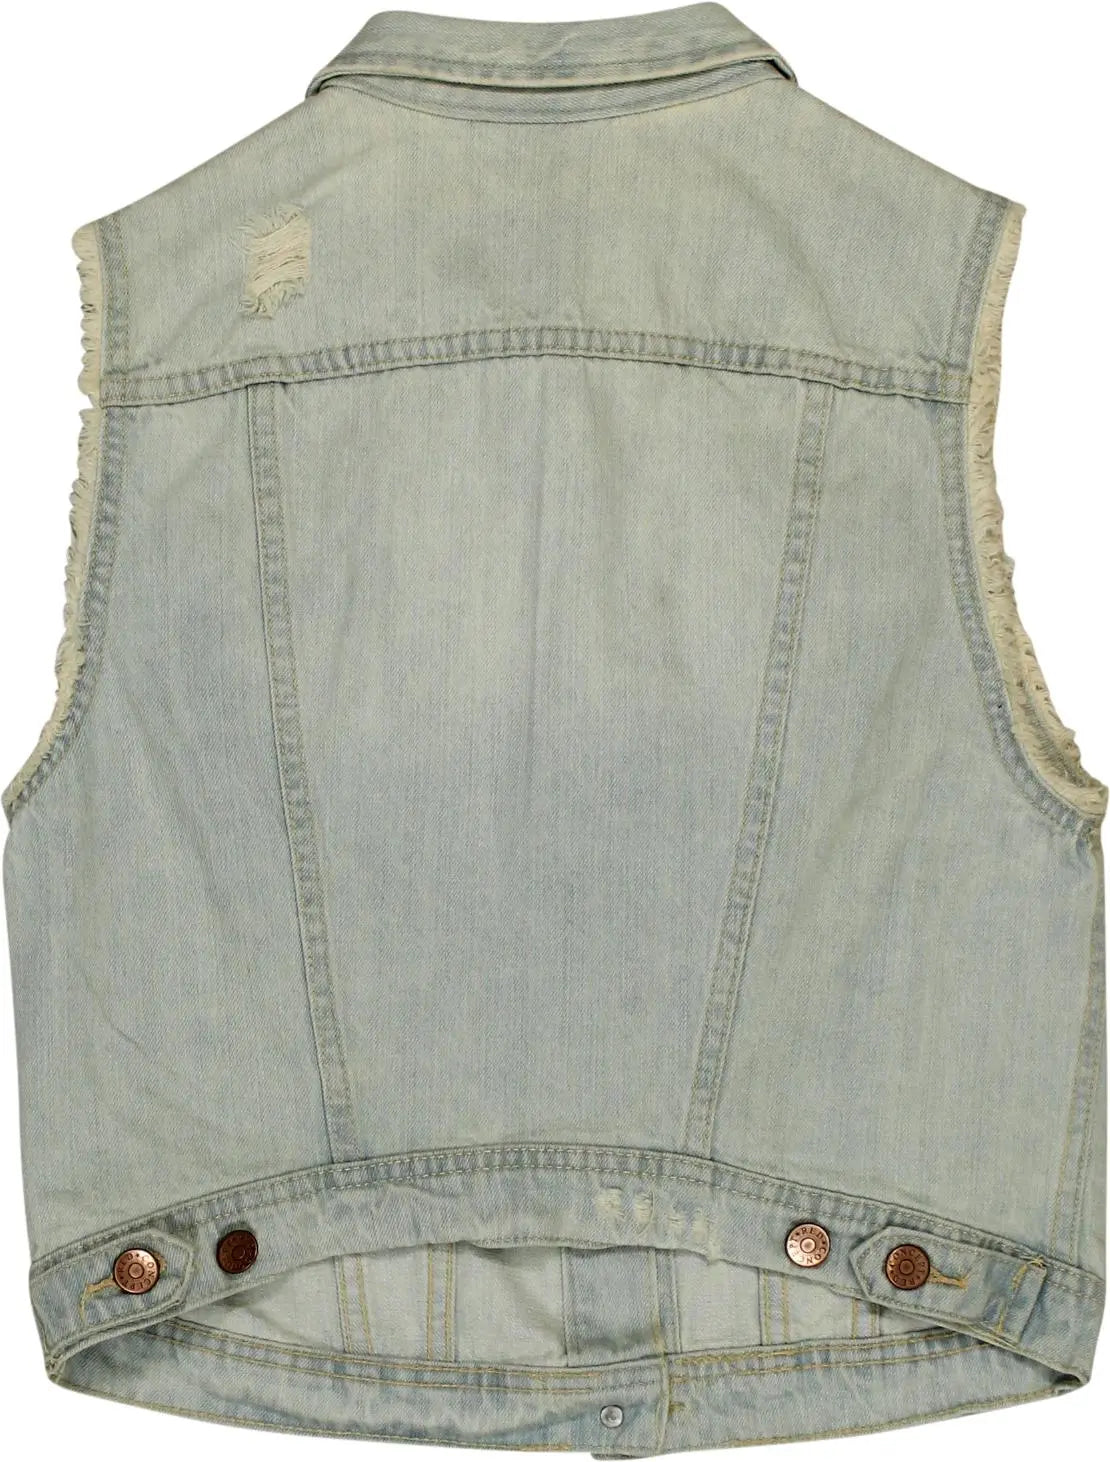 H&M - Sleeveless Denim Vest- ThriftTale.com - Vintage and second handclothing